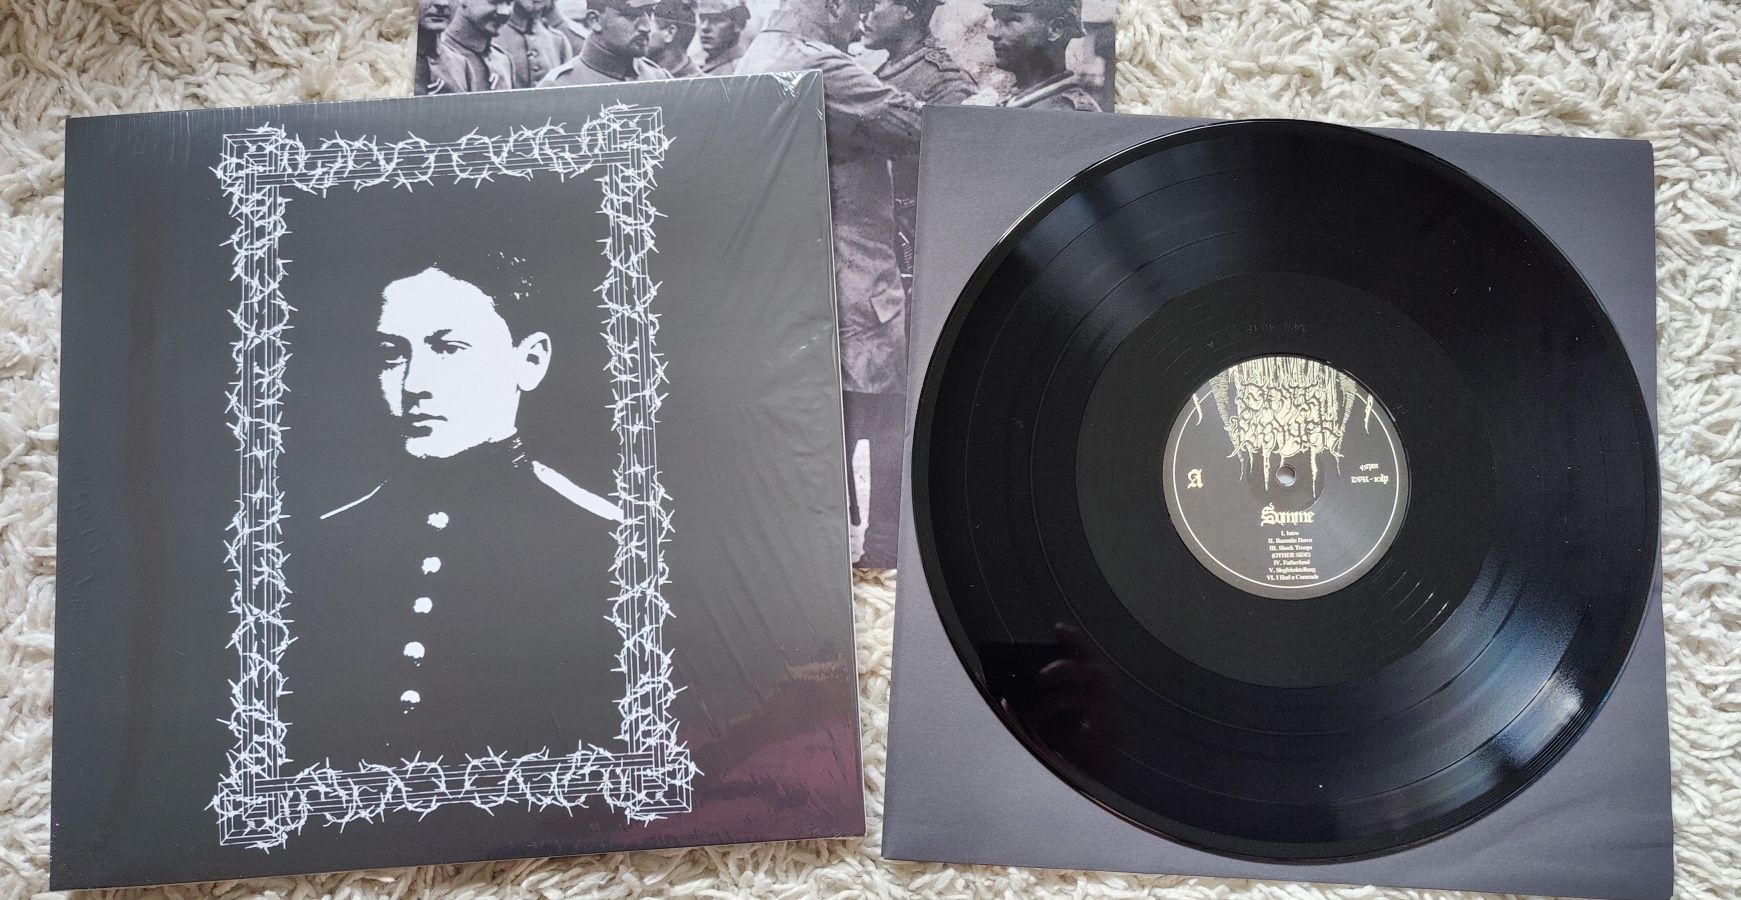 SOMME Somme LP black metal (death prayer records)